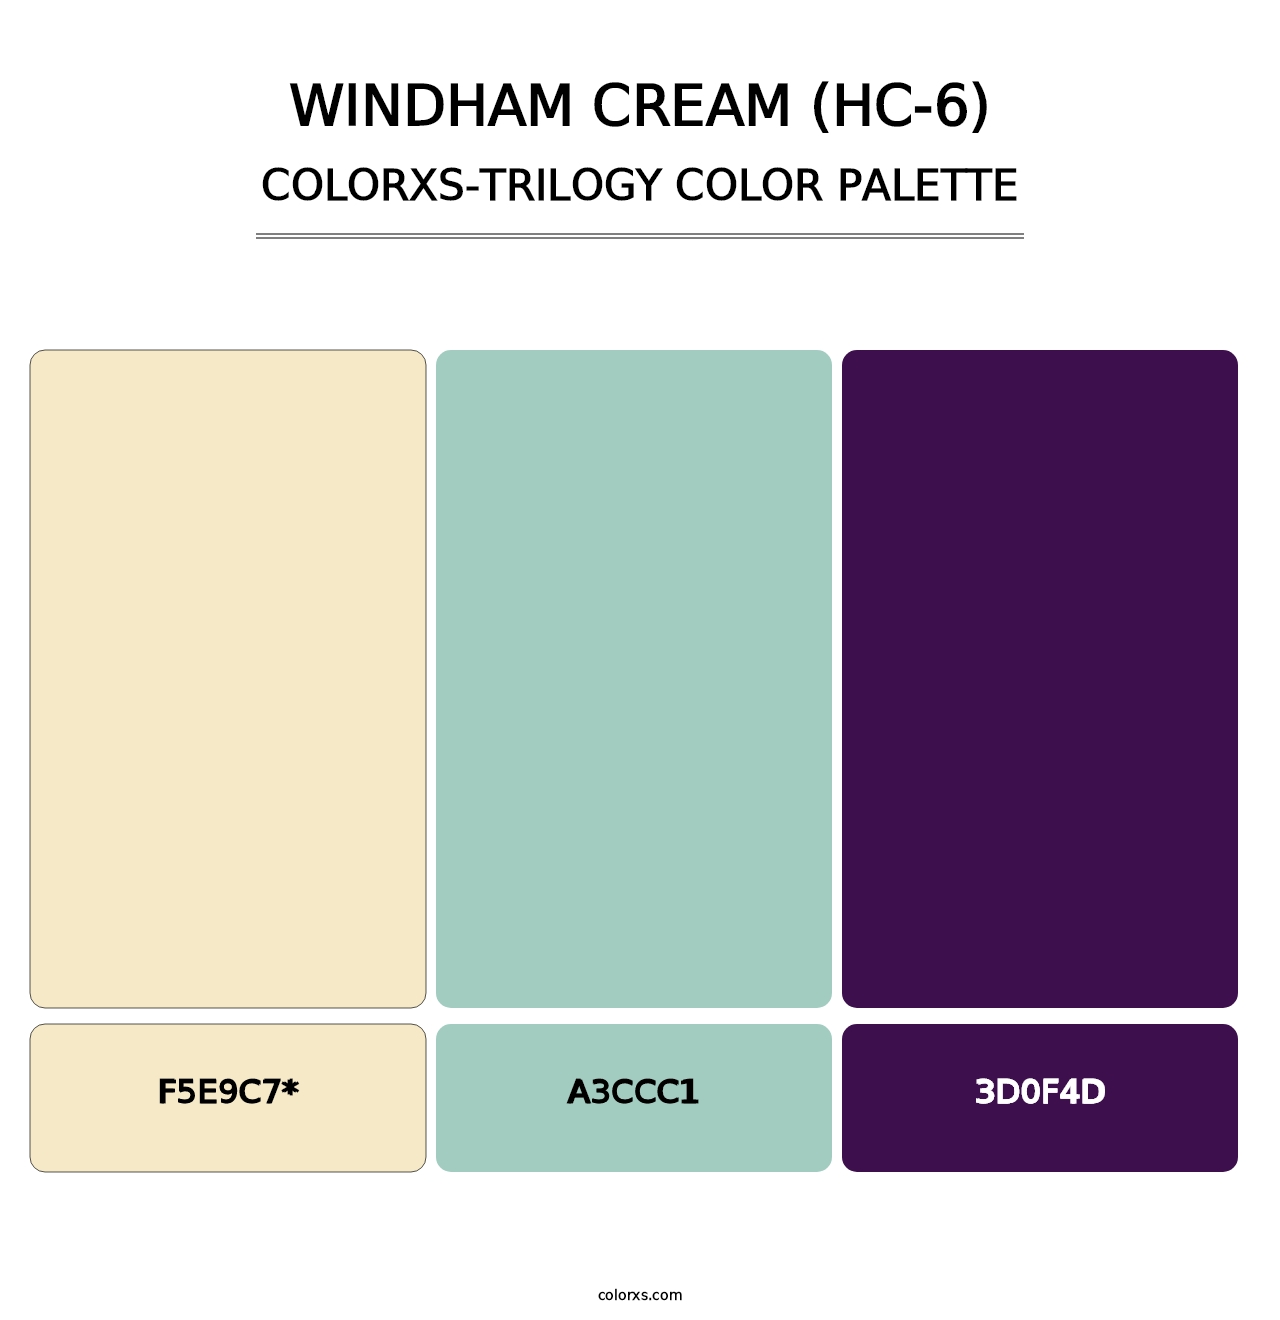 Windham Cream (HC-6) - Colorxs Trilogy Palette